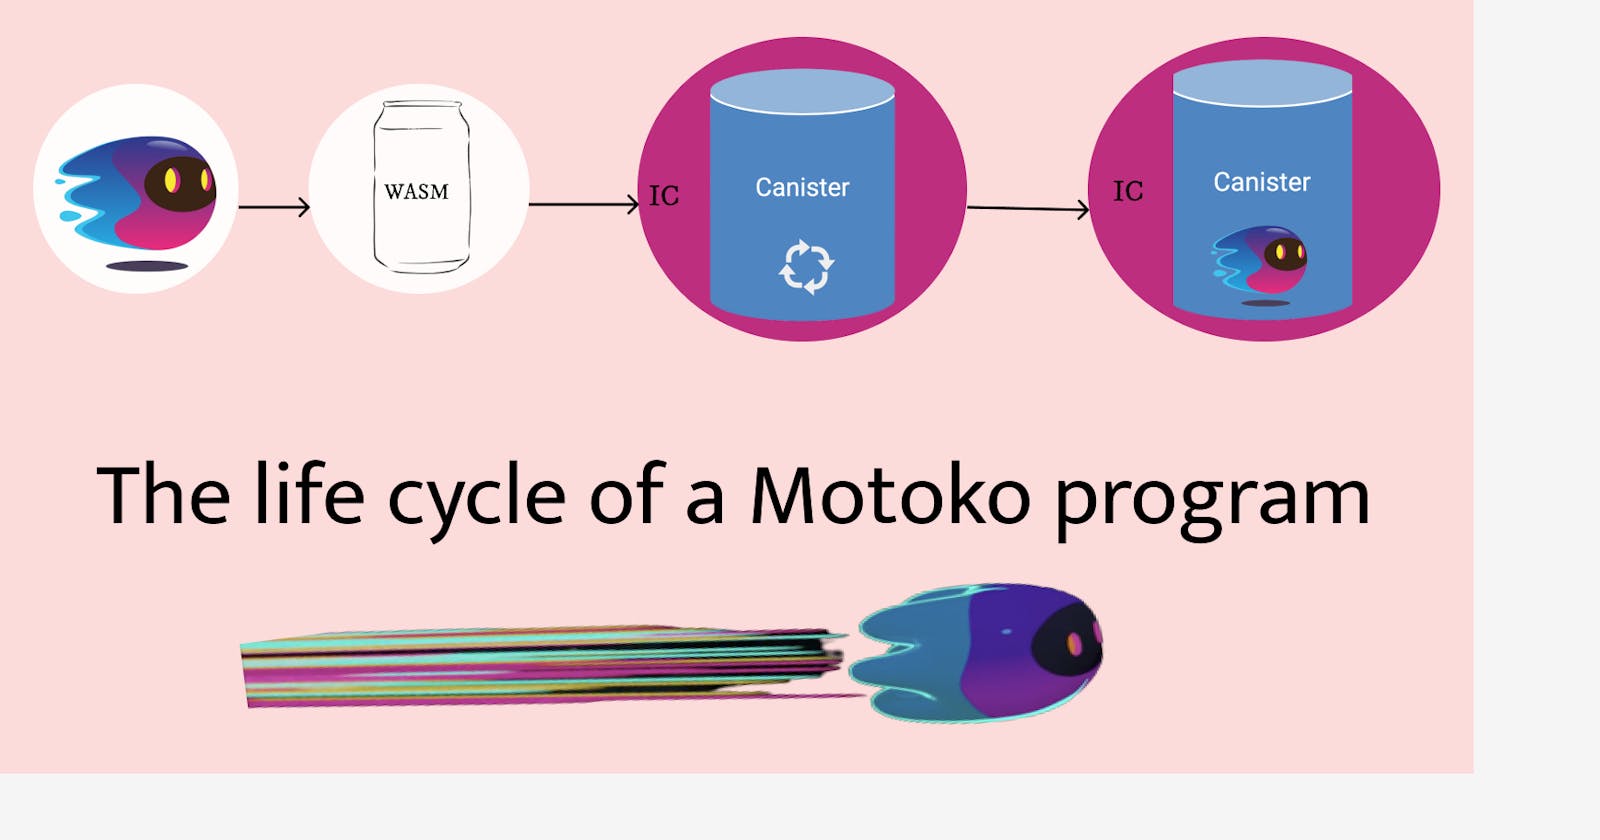 The life cycle of a Motoko program